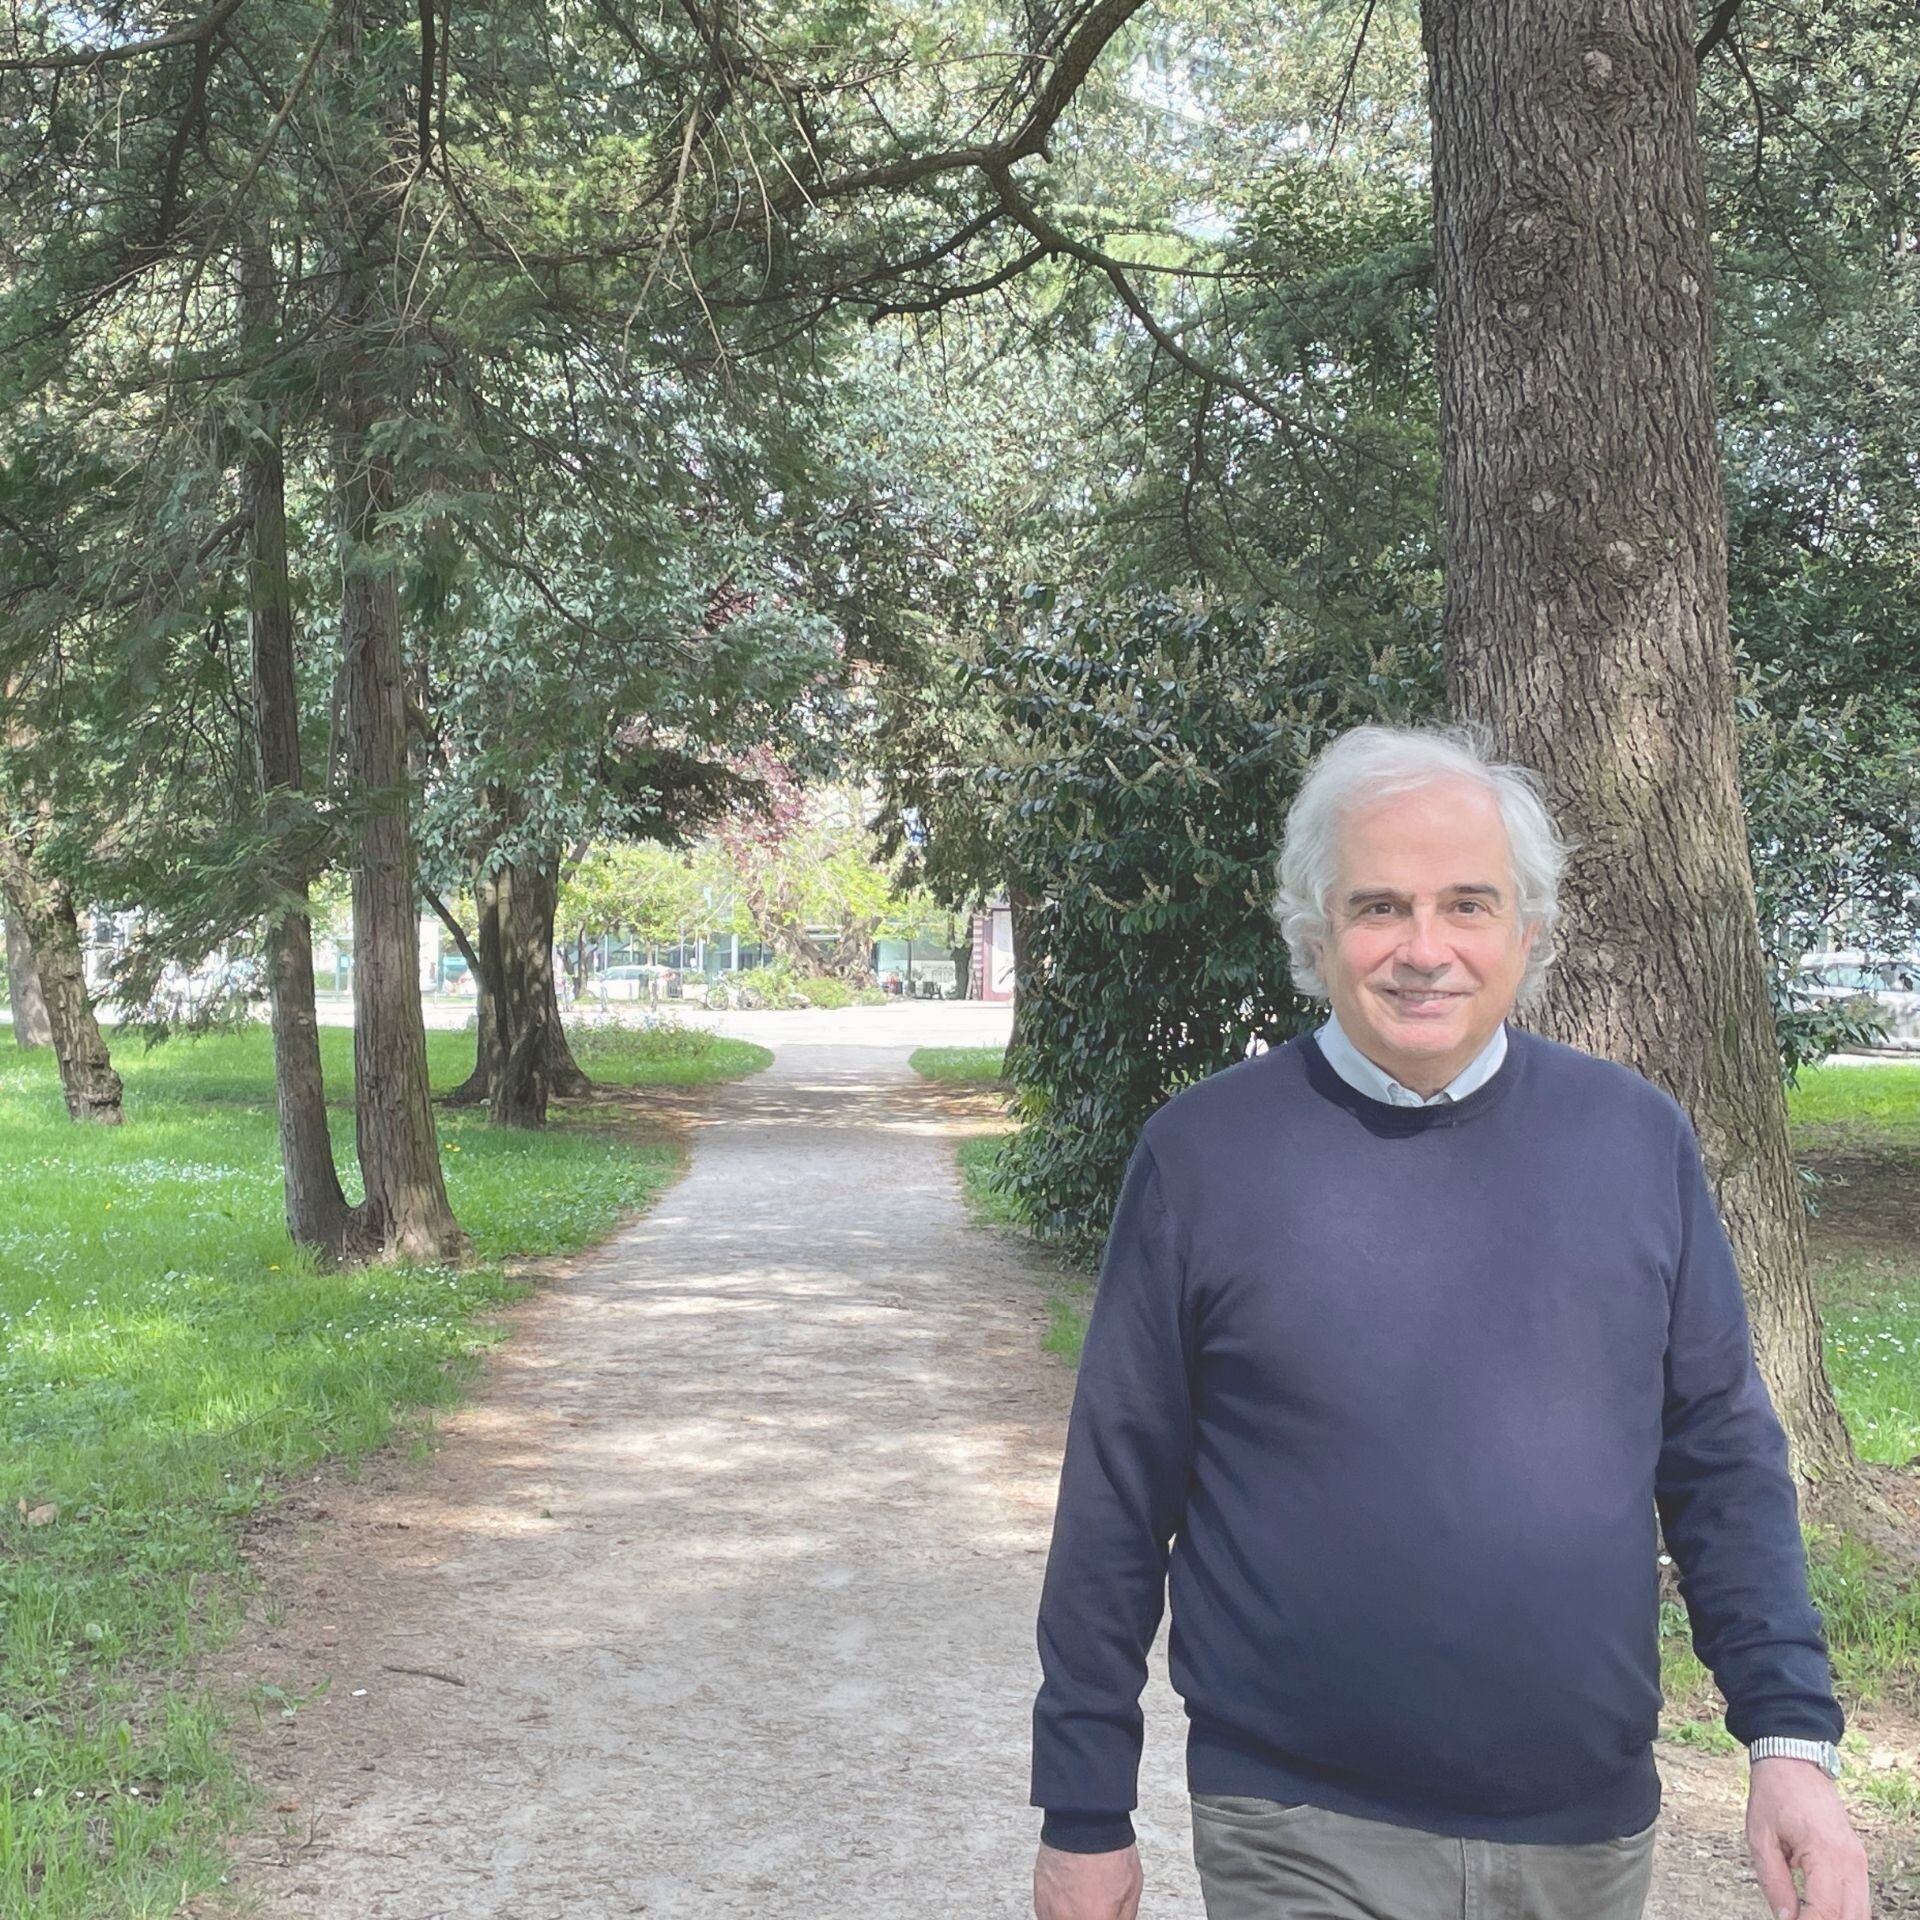 Andrea Bellavite and the Gorizia Walk (Walk 2 Spirit)